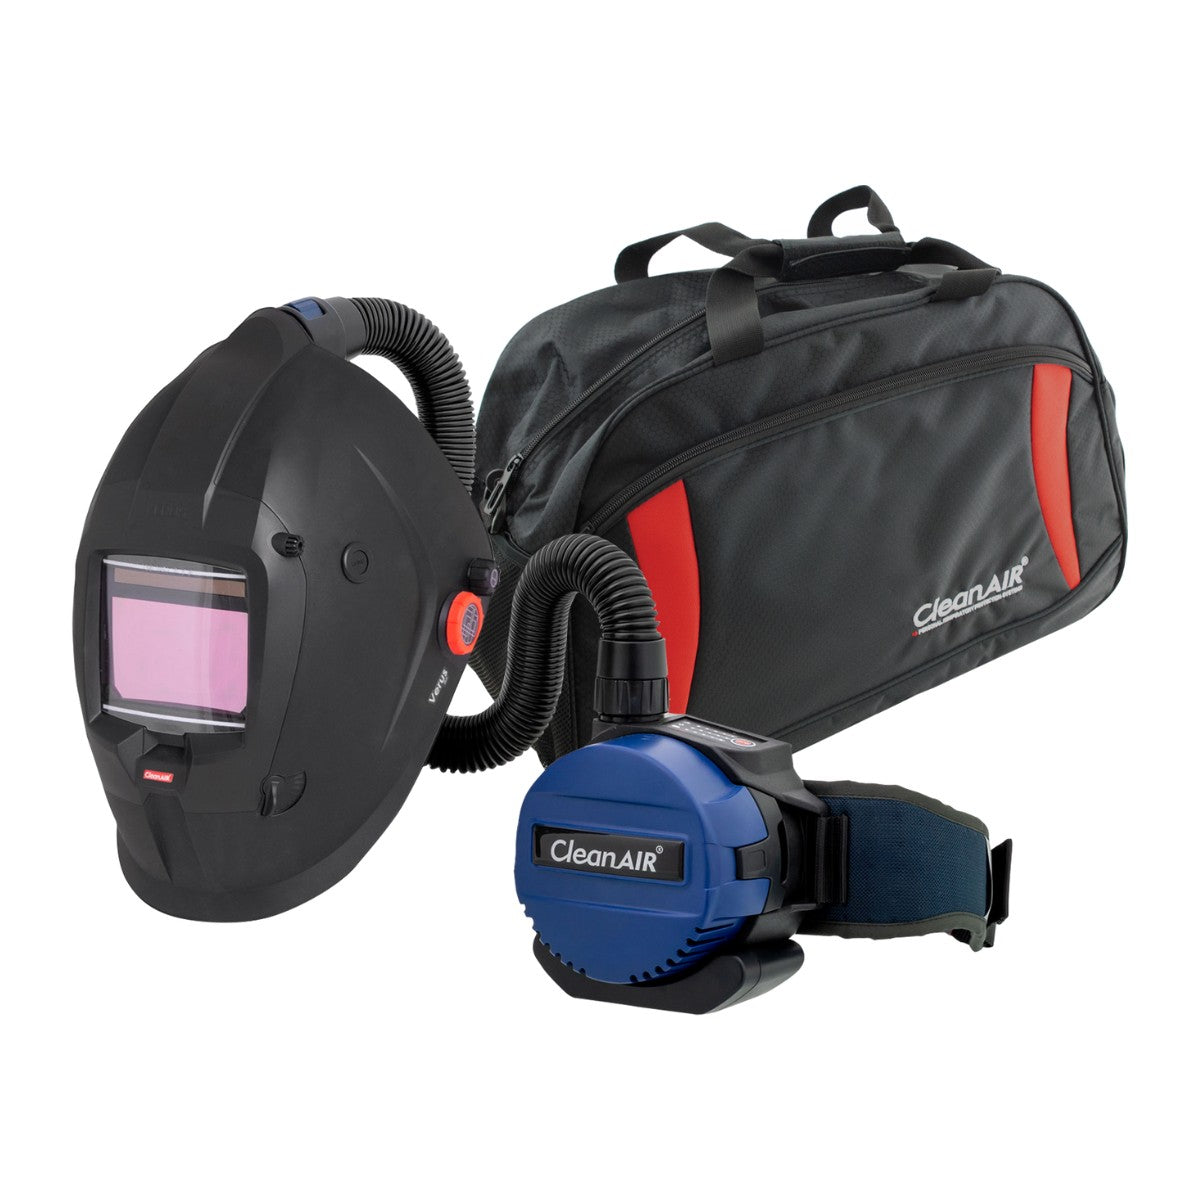 Maxisafe CleanAIR Verus Welding Helmet & Basic PAPR Kit R813001